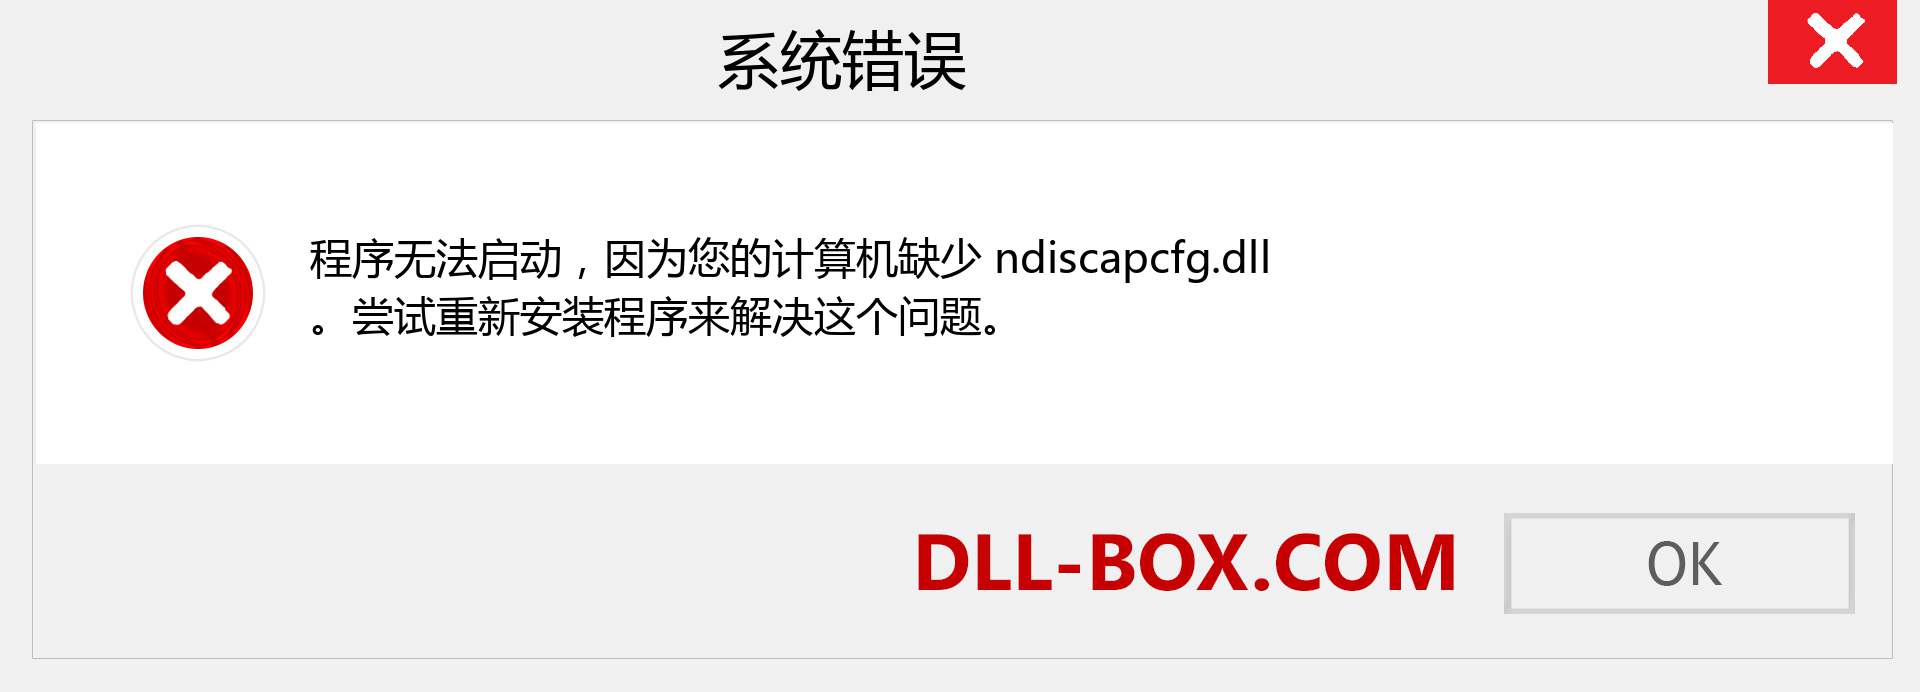 ndiscapcfg.dll 文件丢失？。 适用于 Windows 7、8、10 的下载 - 修复 Windows、照片、图像上的 ndiscapcfg dll 丢失错误